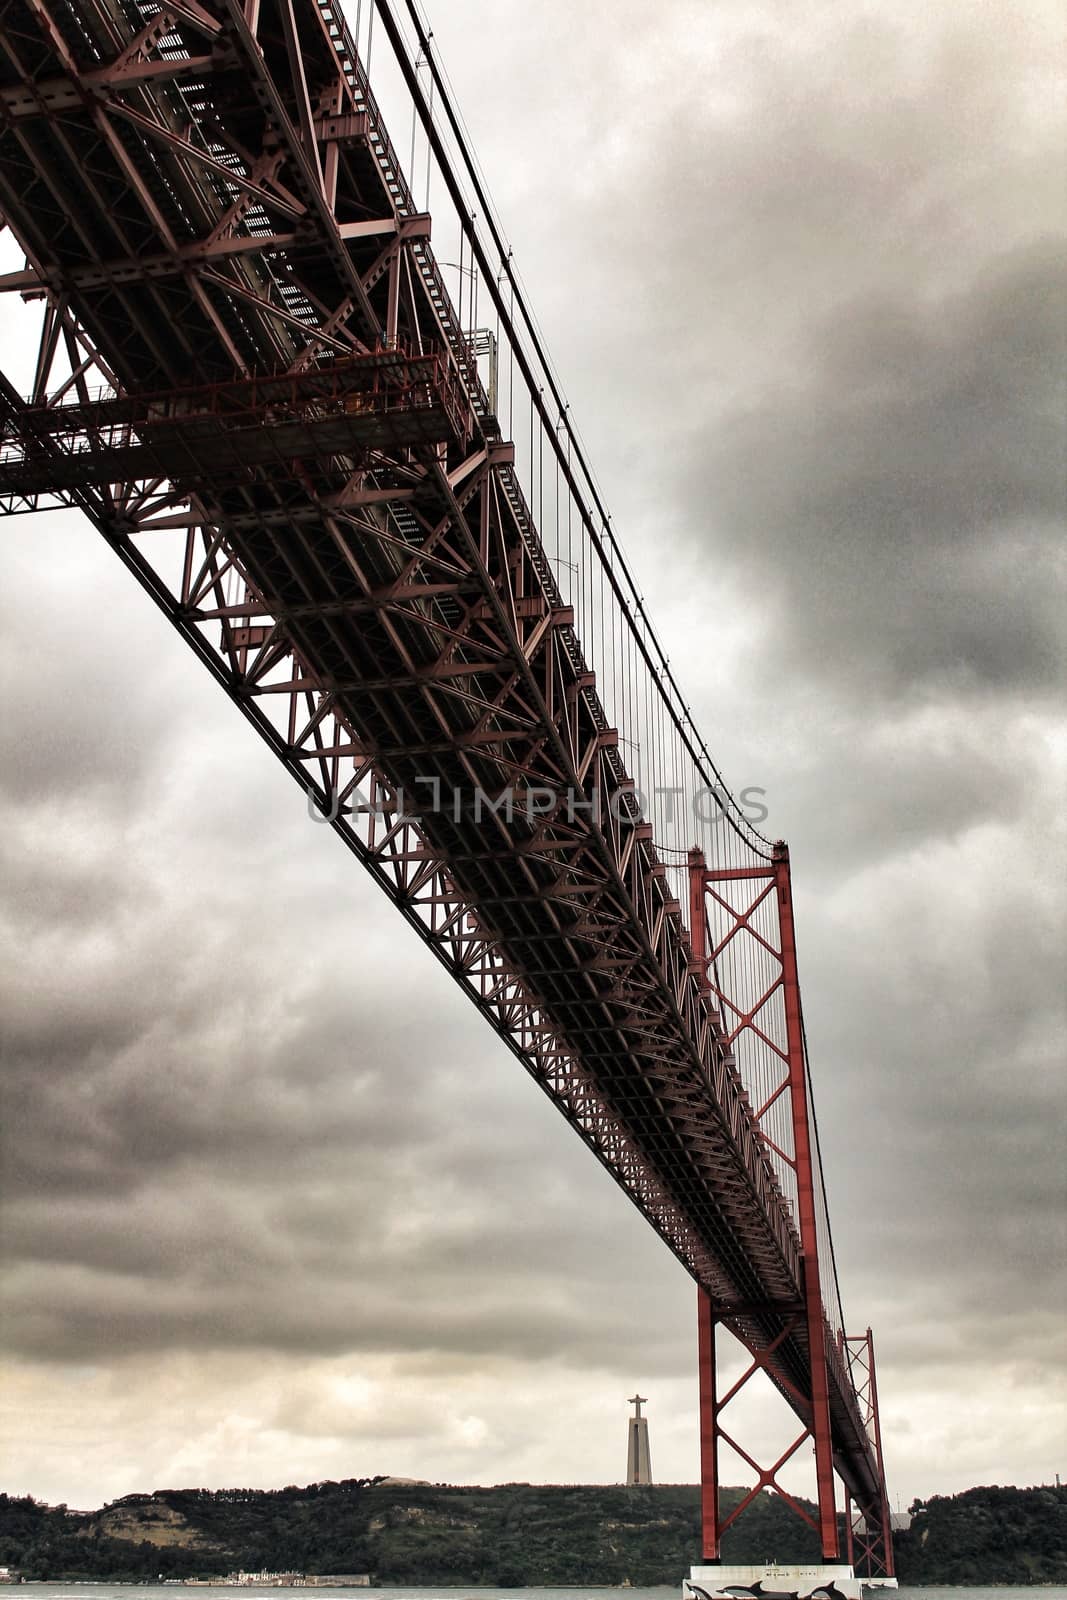 25th April Bridge in Lisbon on a cloudy day by soniabonet